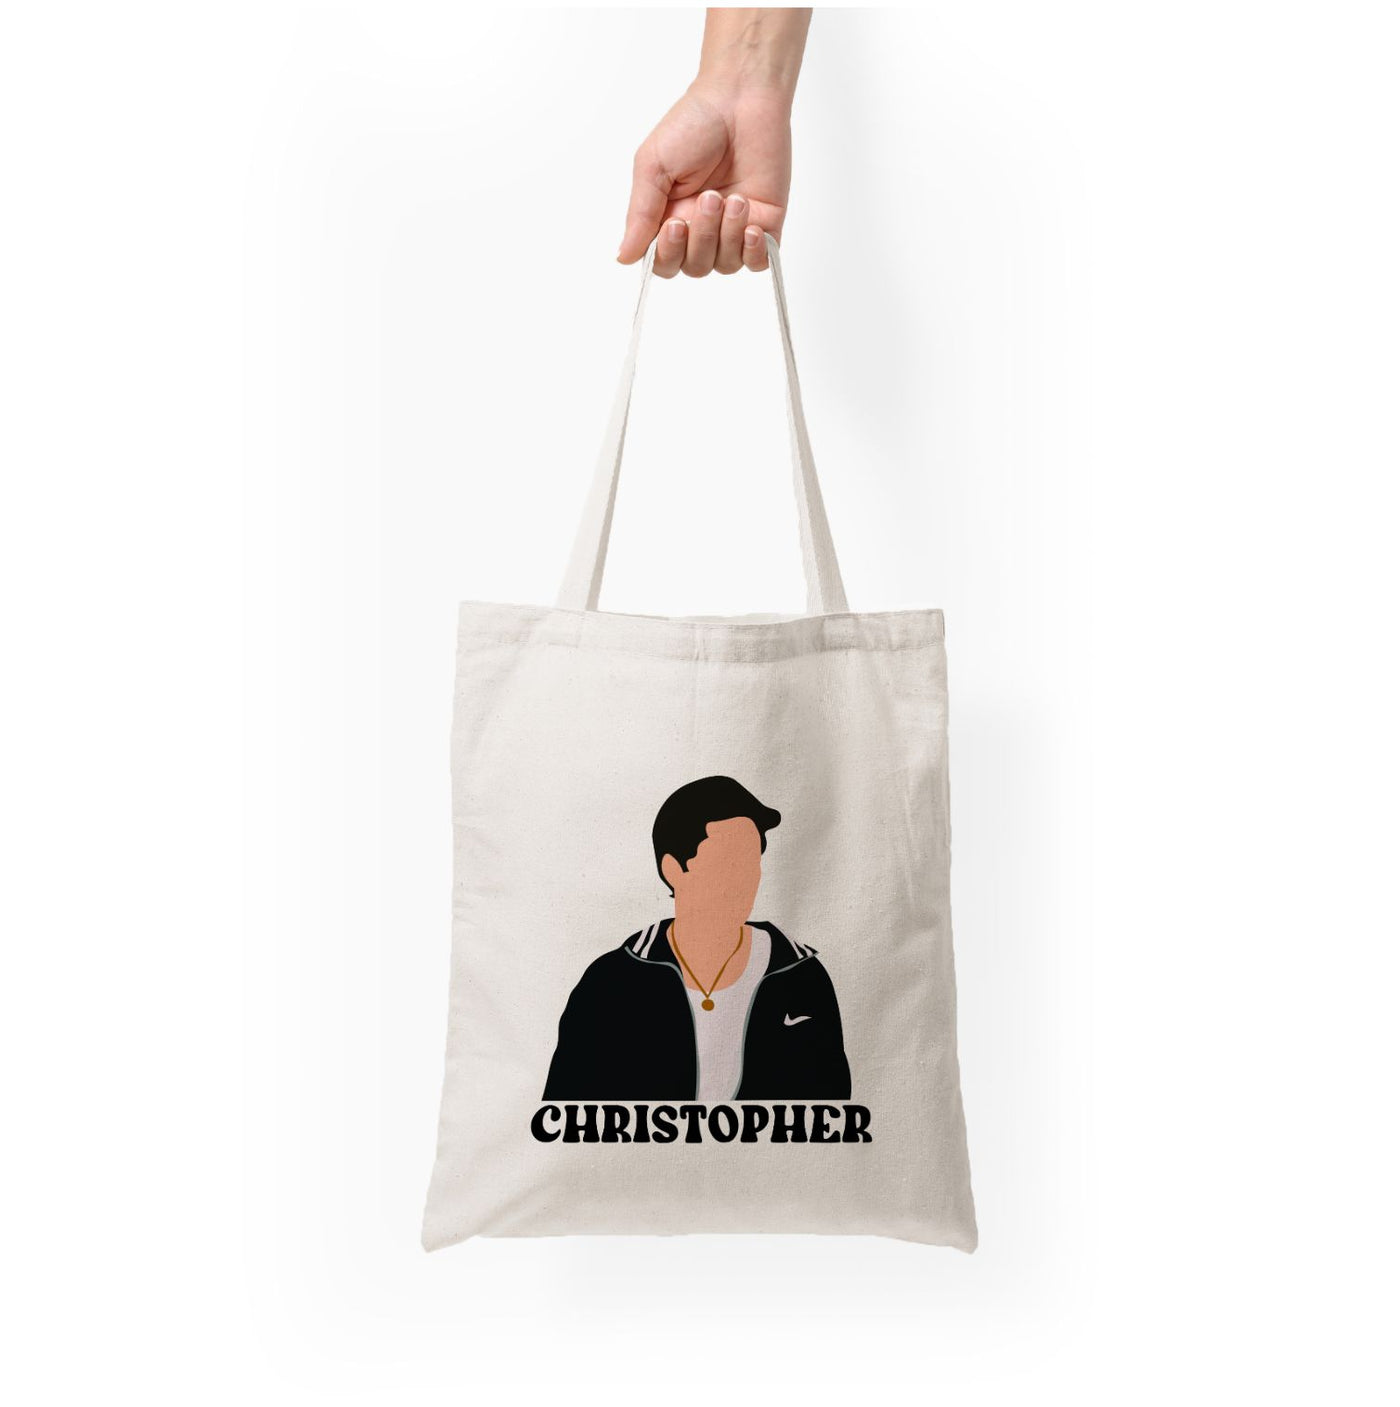 Cristopher - The Sopranos Tote Bag